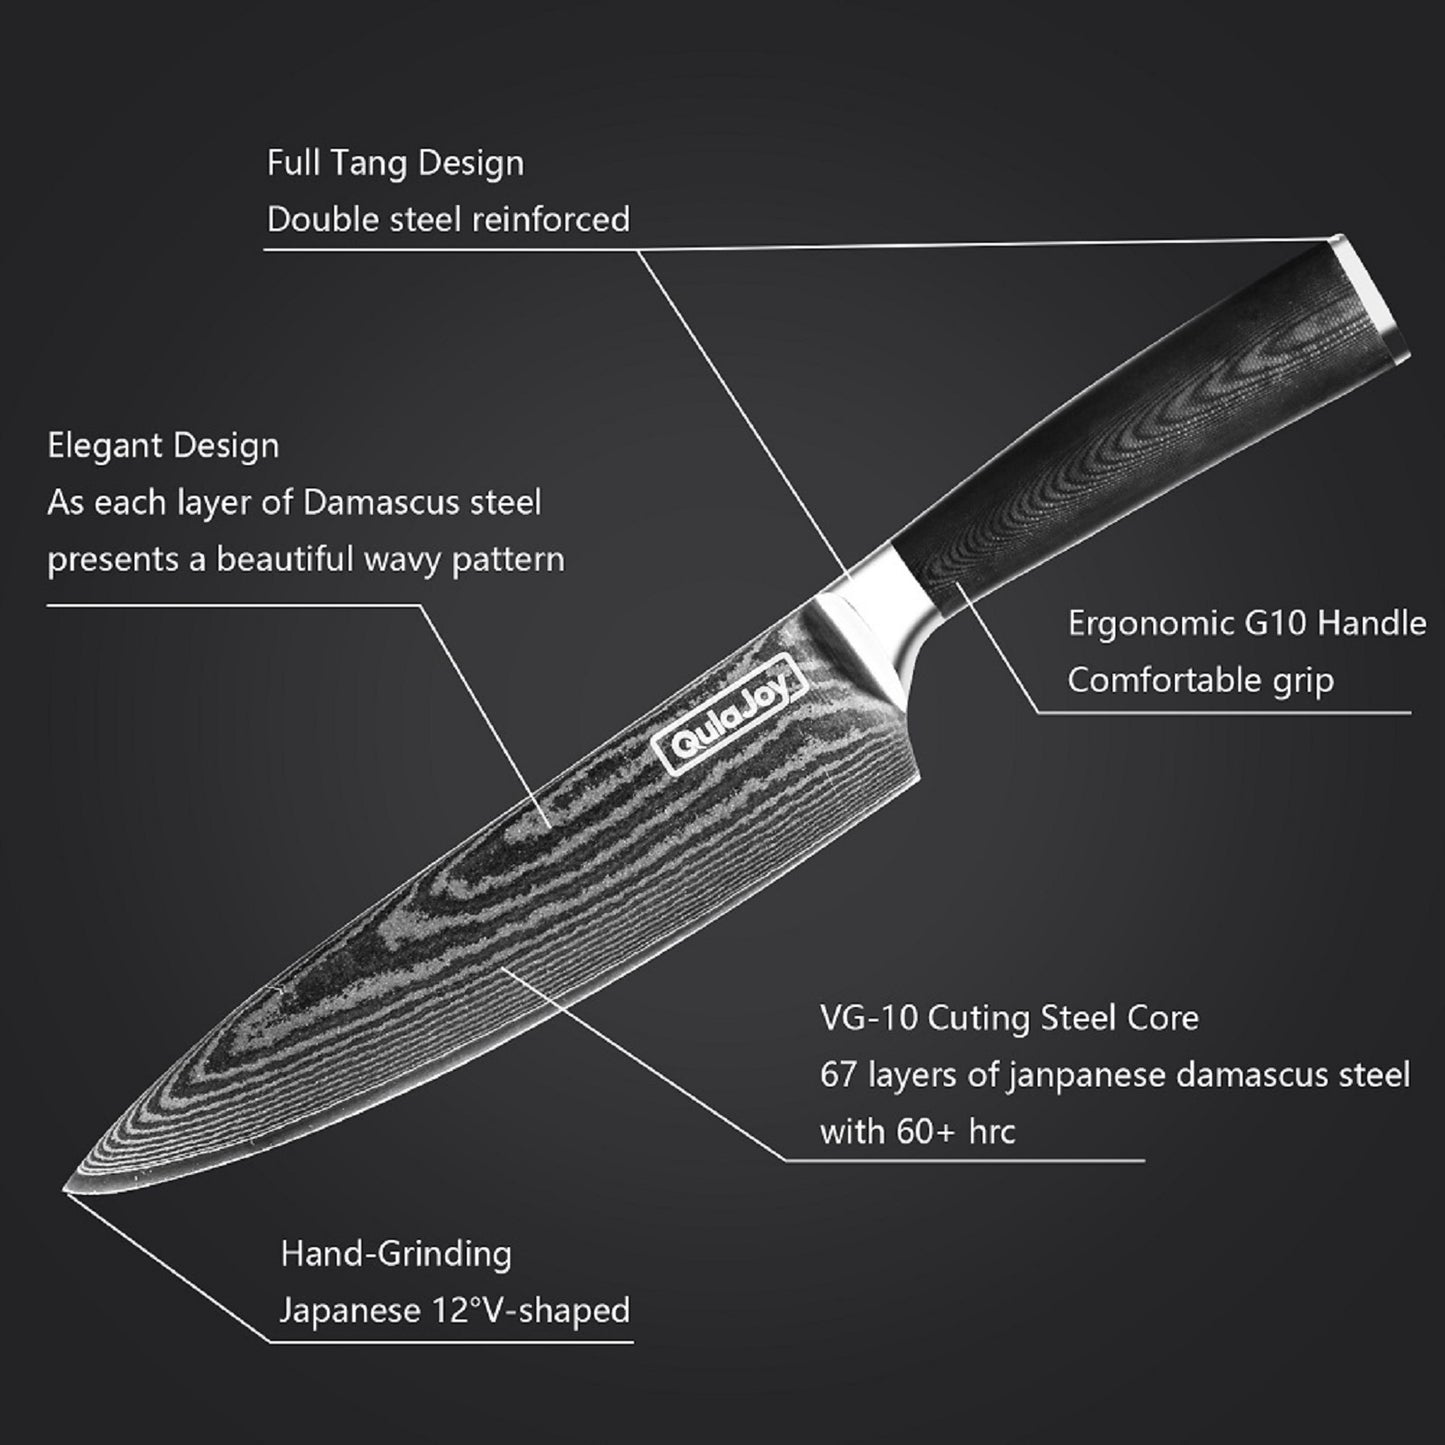 Qulajoy 8 Inch Chef Knife, Ultra Sharp Japanese Damascus VG-10 Blade,Professional Kitchen Knife With Ergonomic G10 Handle And Sheath